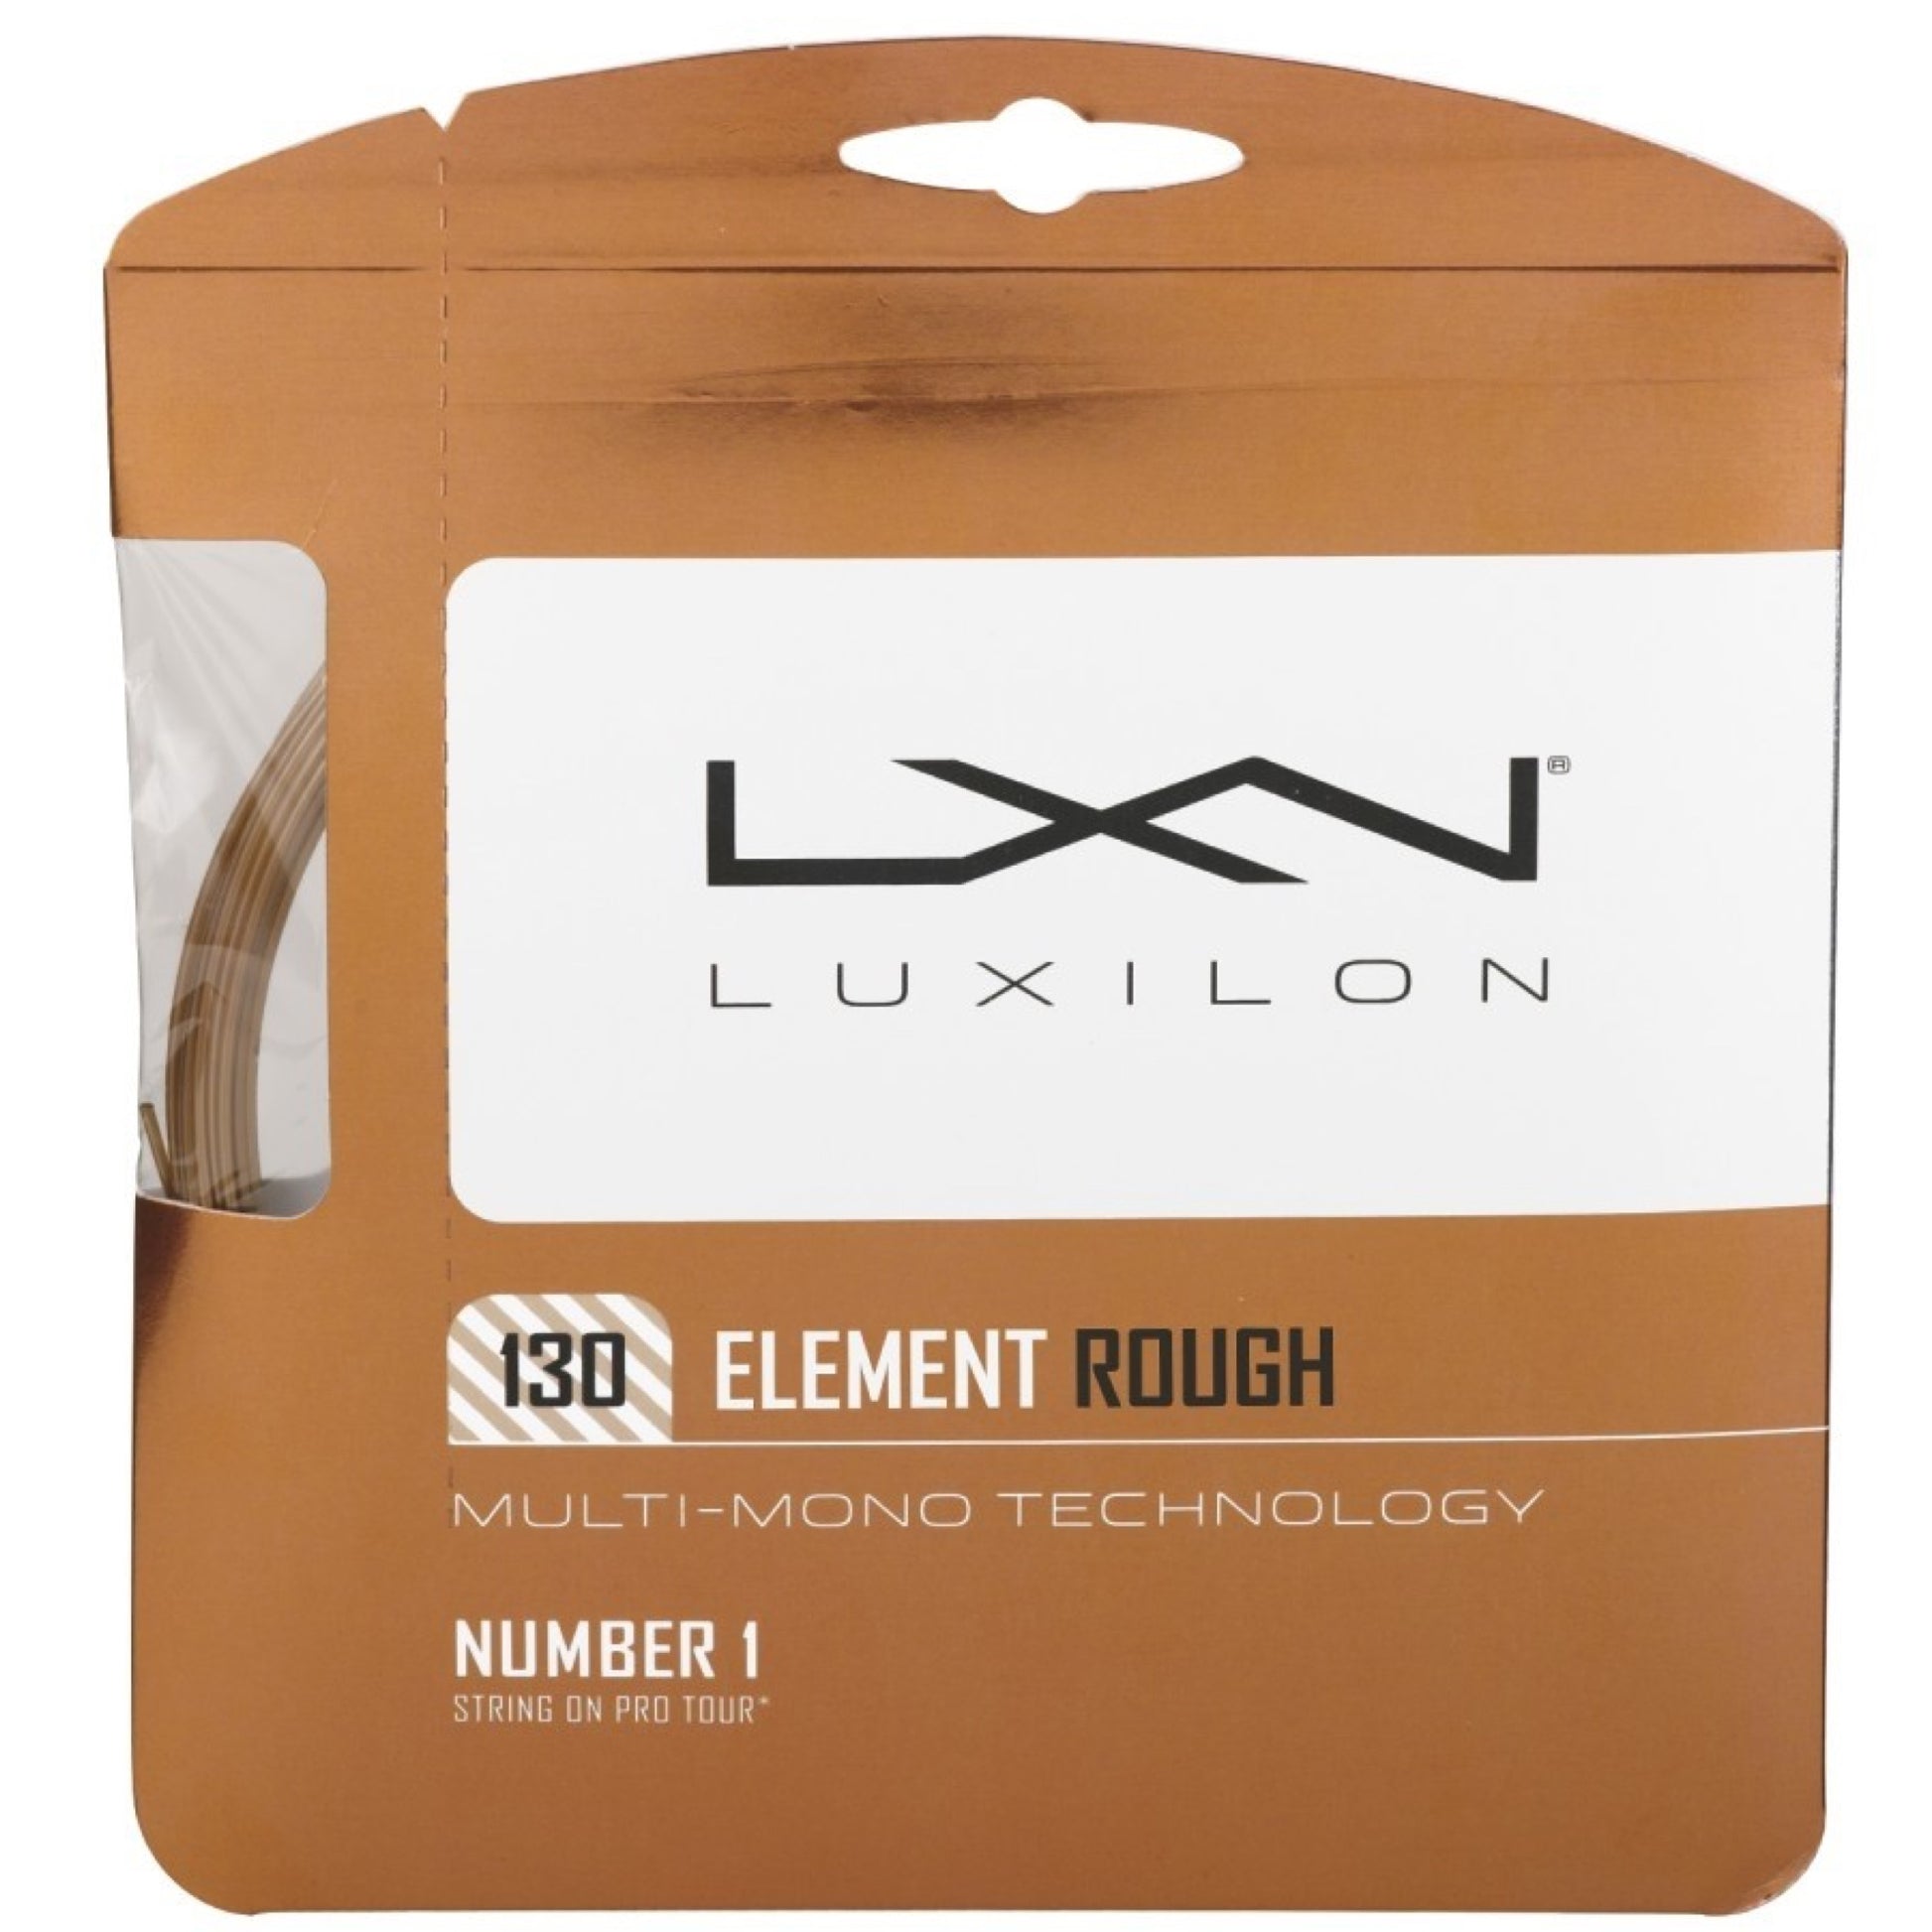 Luxilon Element Rough 130 tennis string set - VuTennis